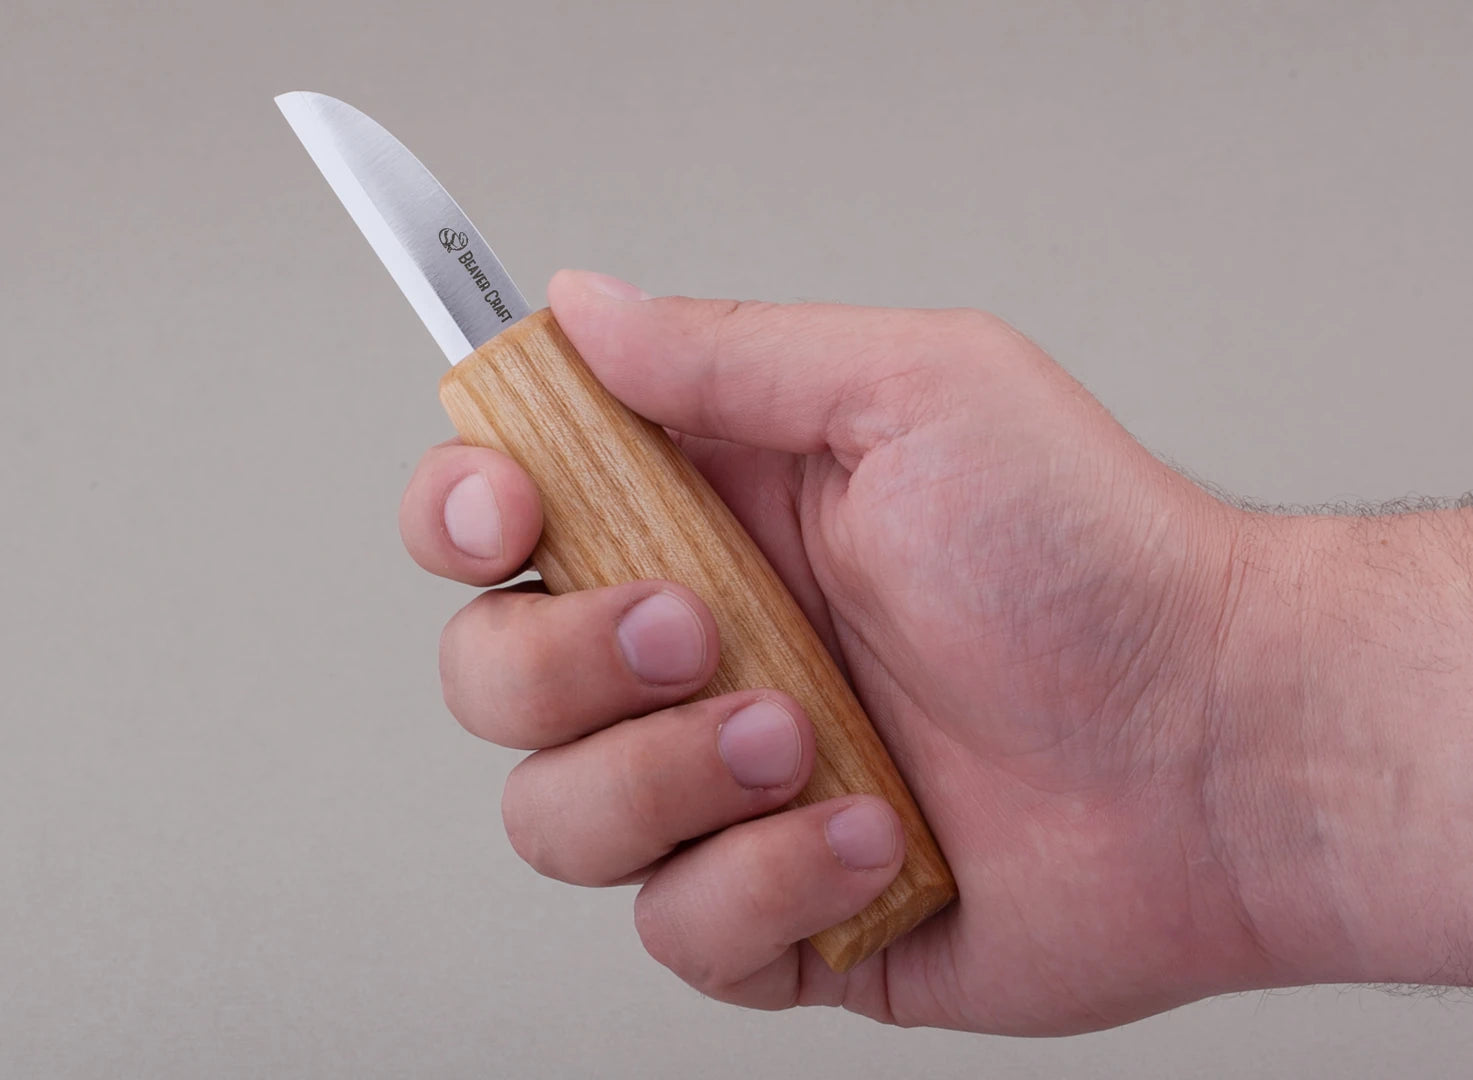 Bench Knife